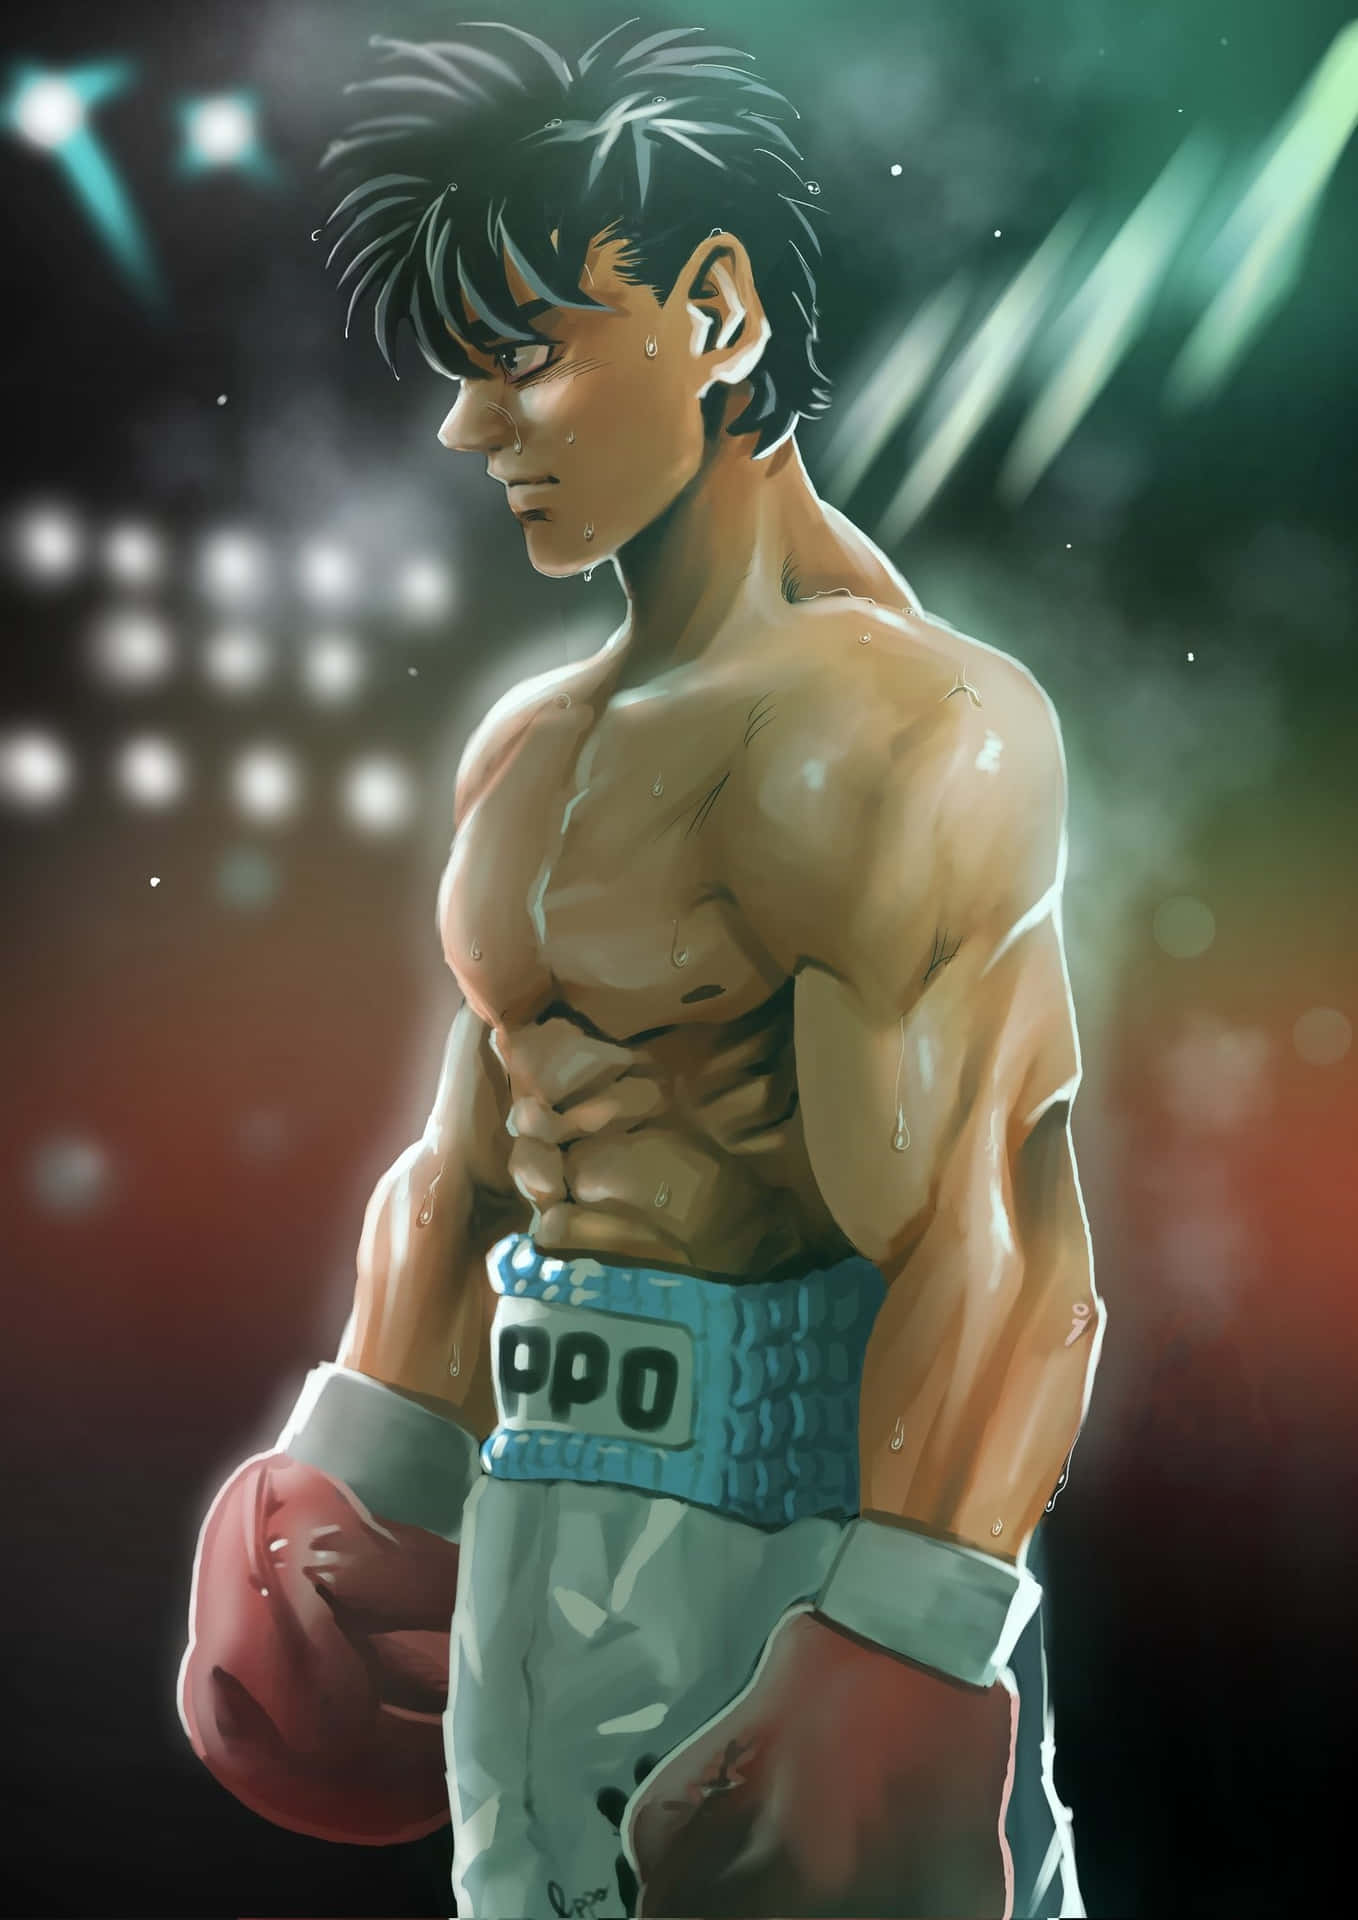 Boxer Readyfor Fight Illustration Wallpaper